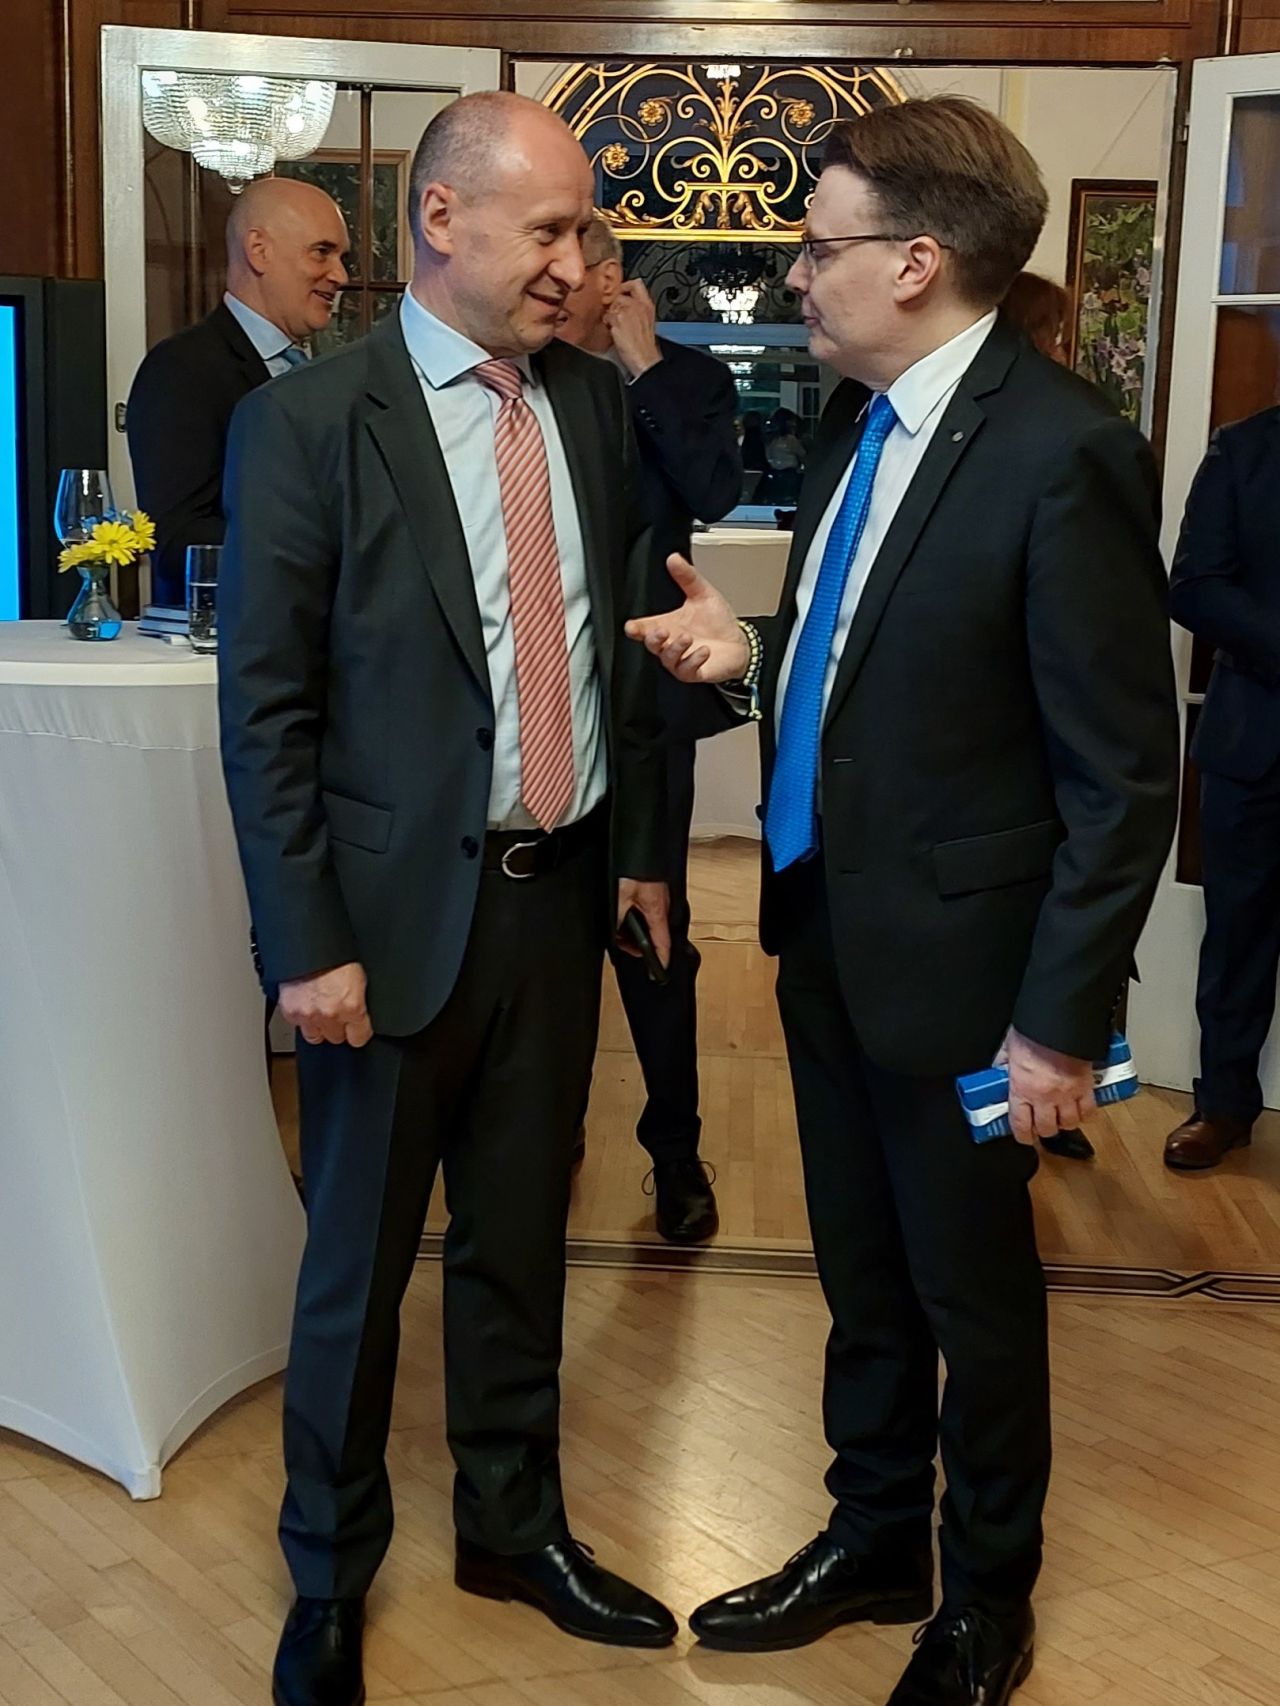 IOI President, Chris Field PSM with Ukrainian Ambassador to Austria, Dr Vasyl Khymynets.